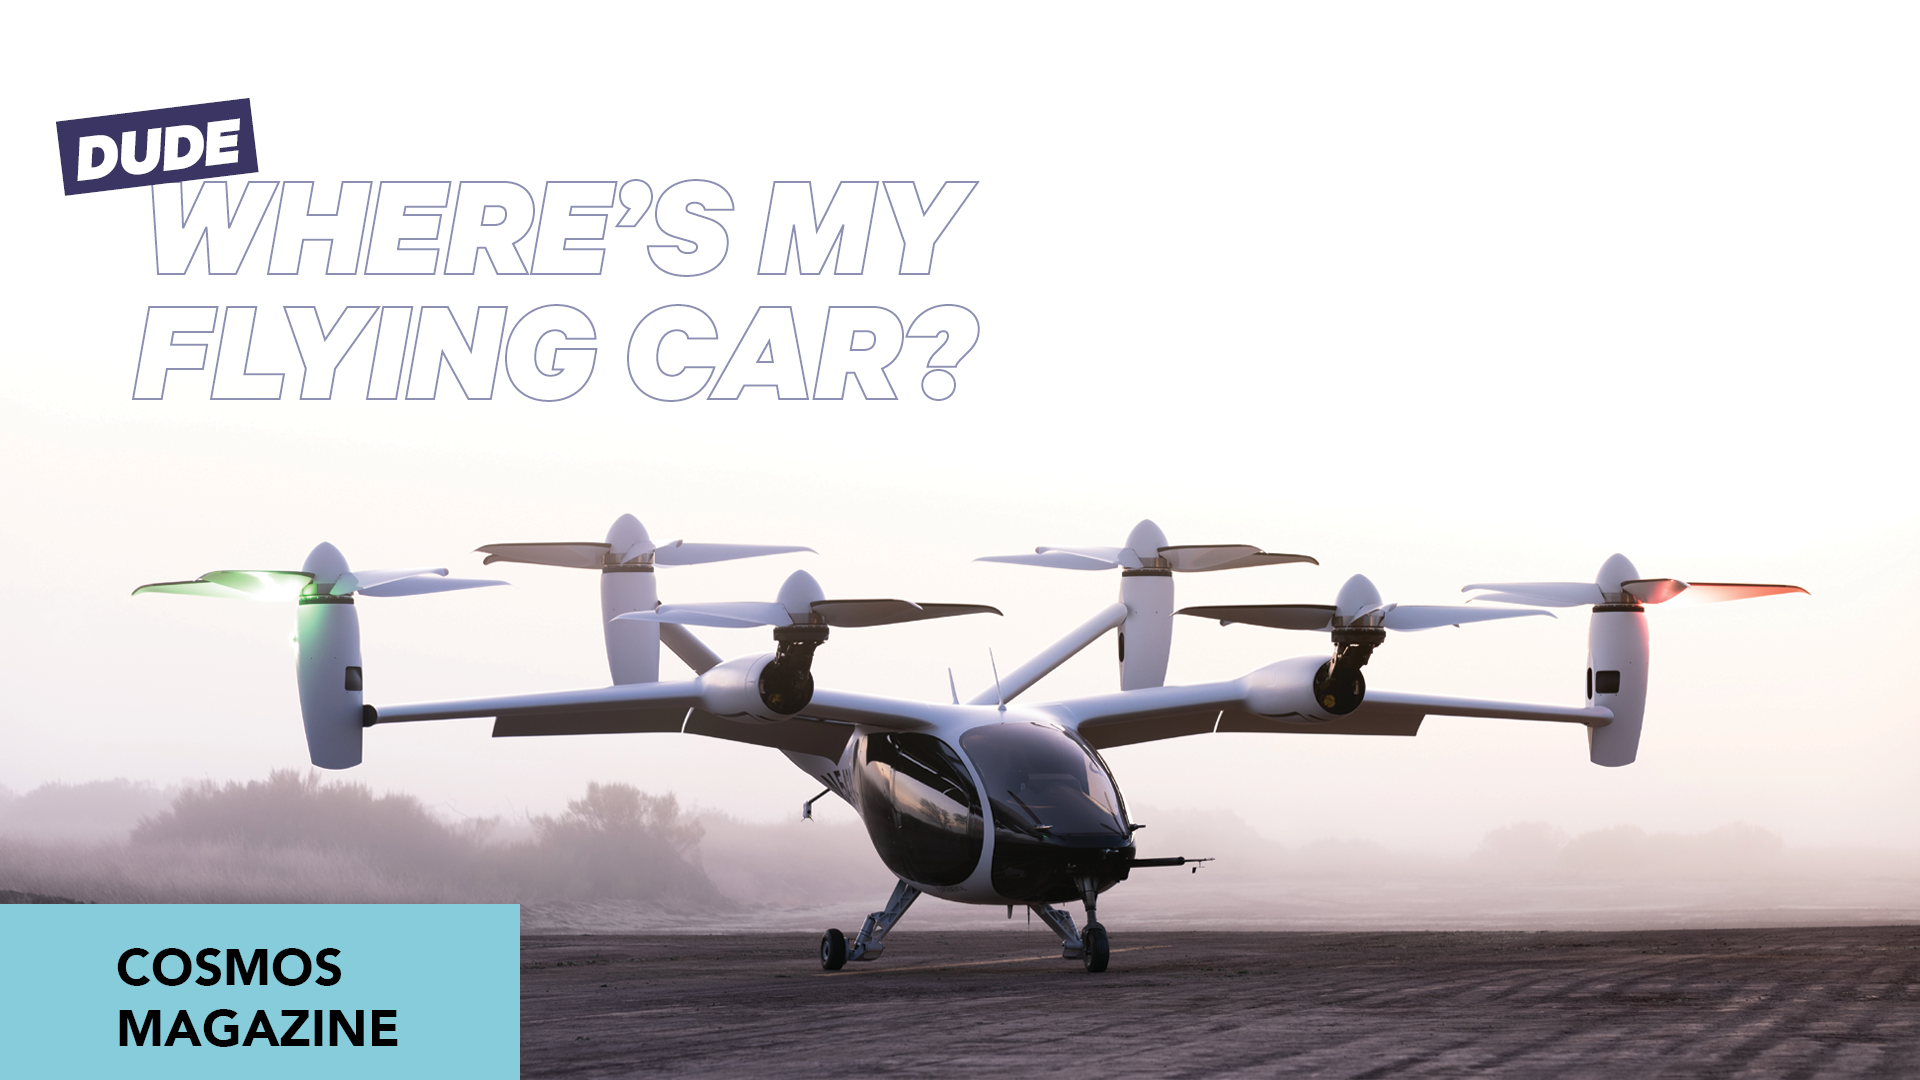 COSMOS Magazine: Dude! Where’s my flying car?